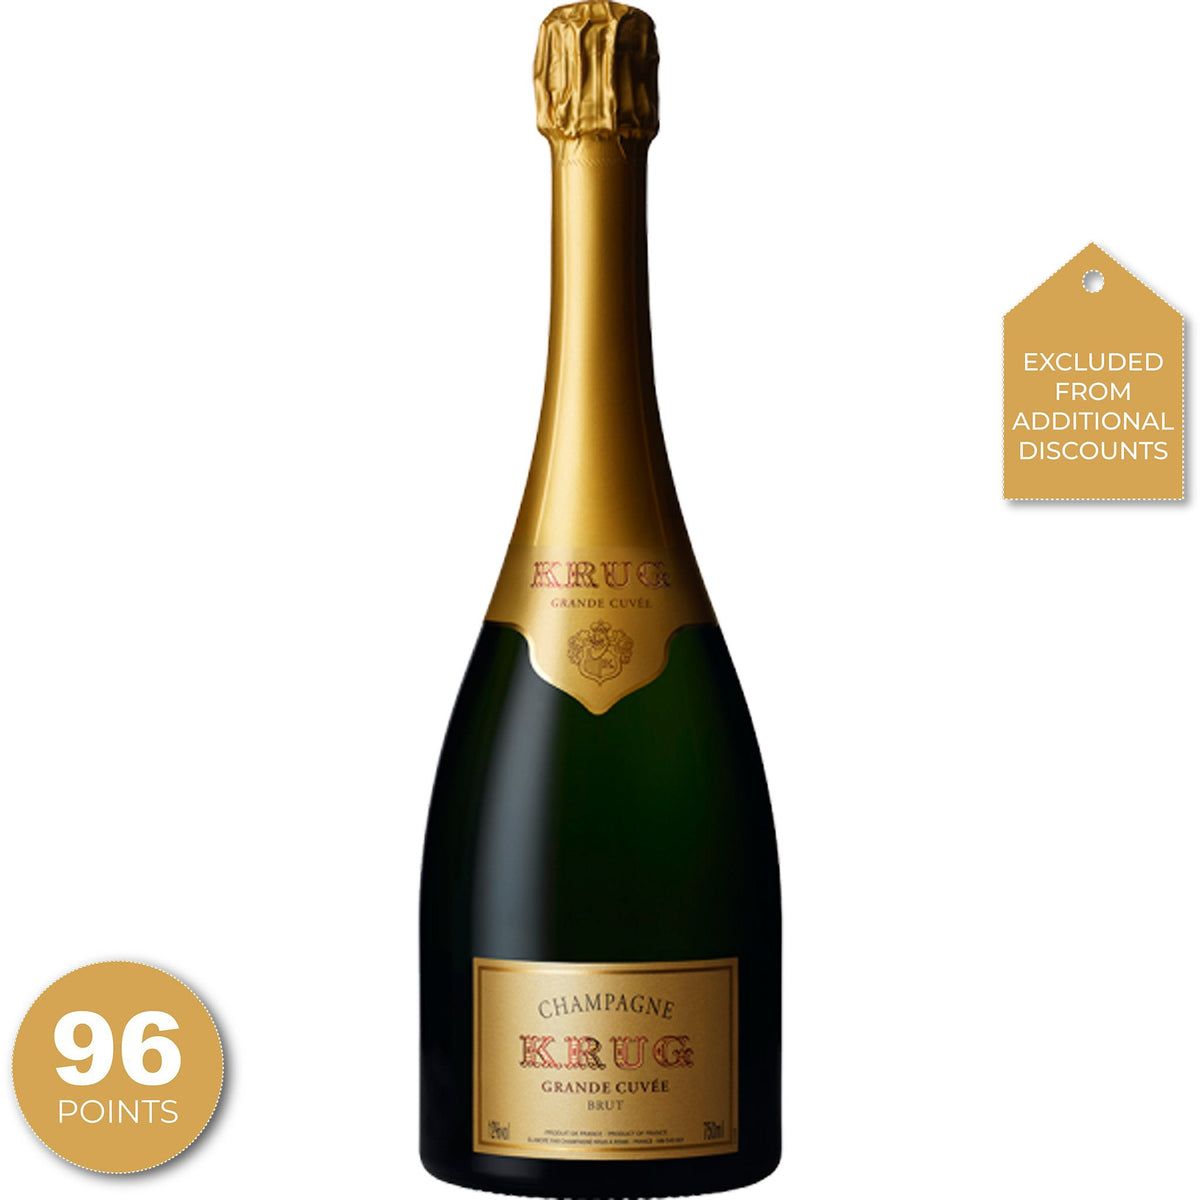 Krug Grande Cuvee 170th Edition, Champagne (750ml)